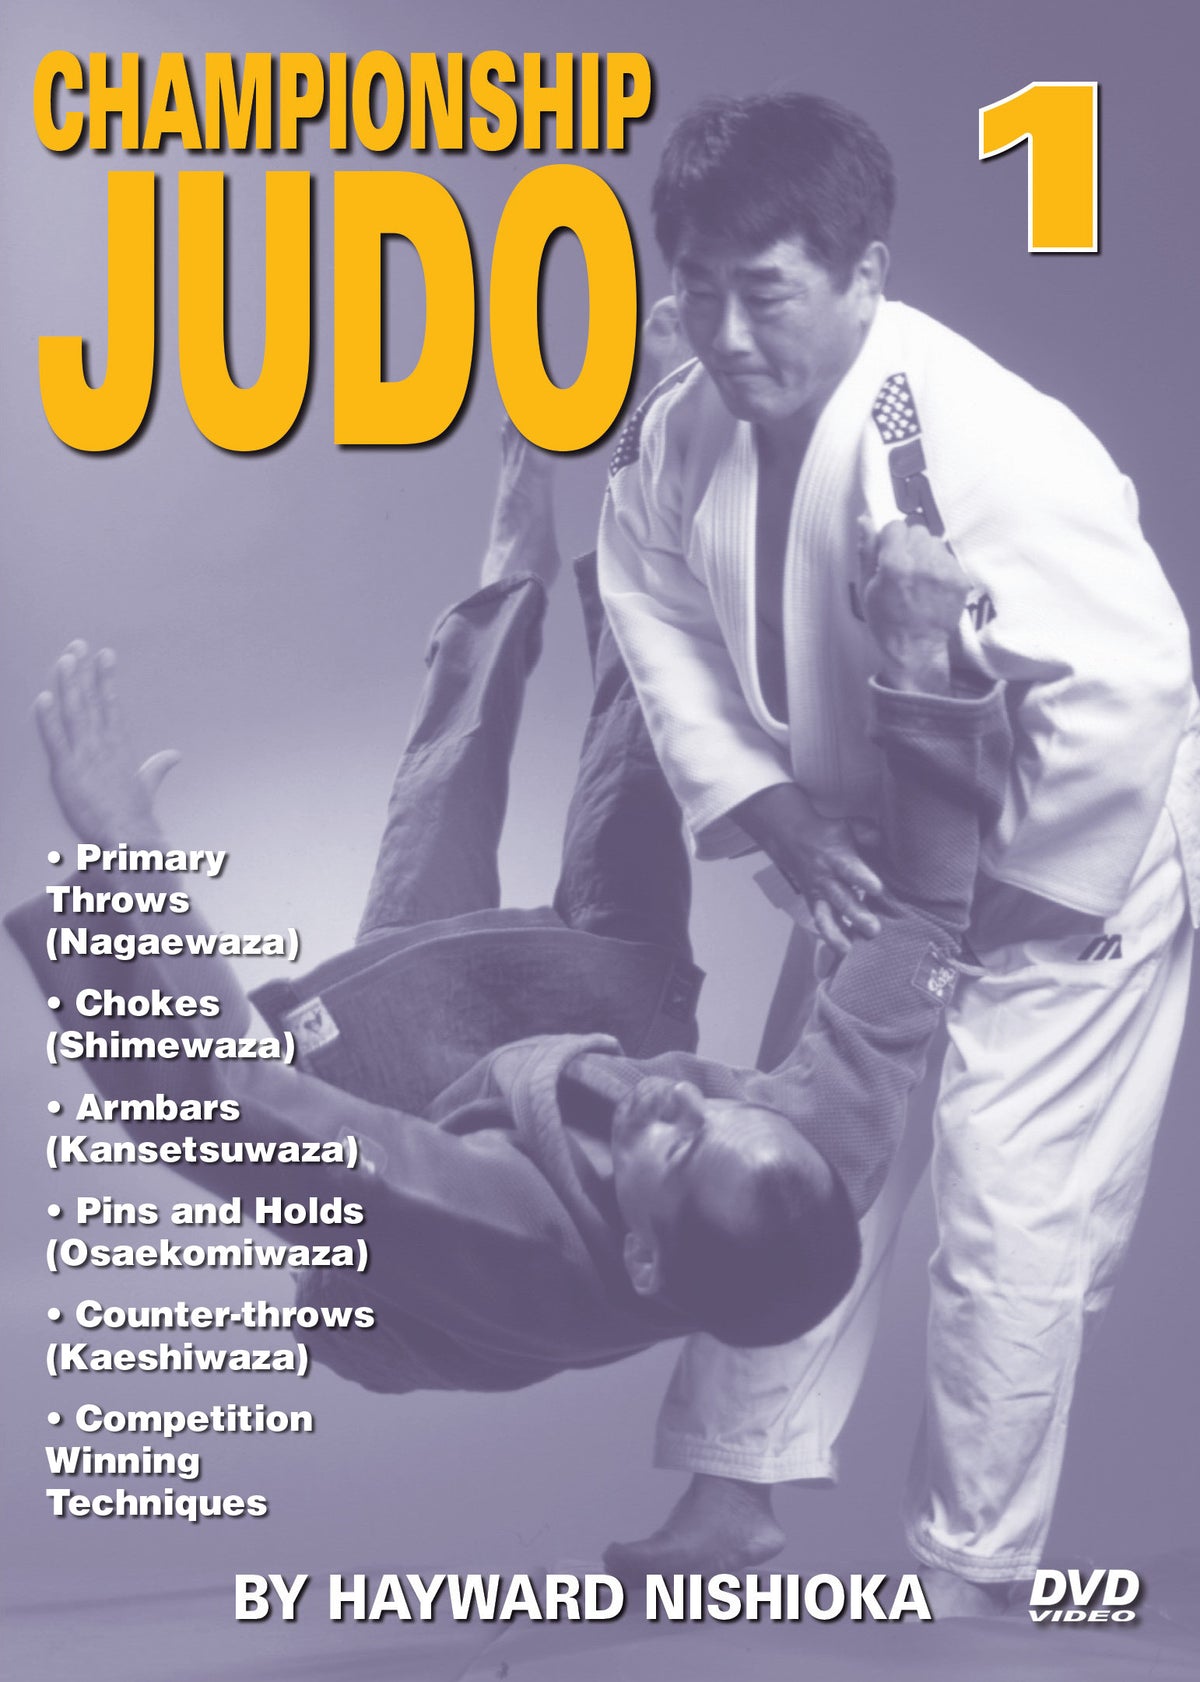 Championship Kodokan Judo #1 DVD Hayward Nishioka breakfalls grappling chokes